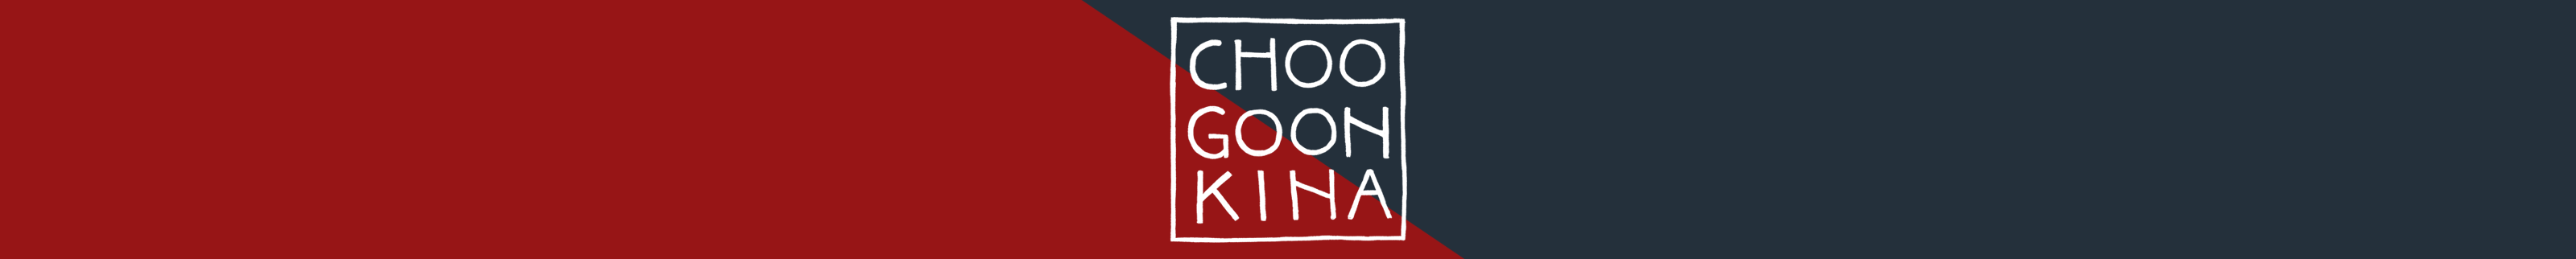 Bannière de profil de Kato Choogoonkina